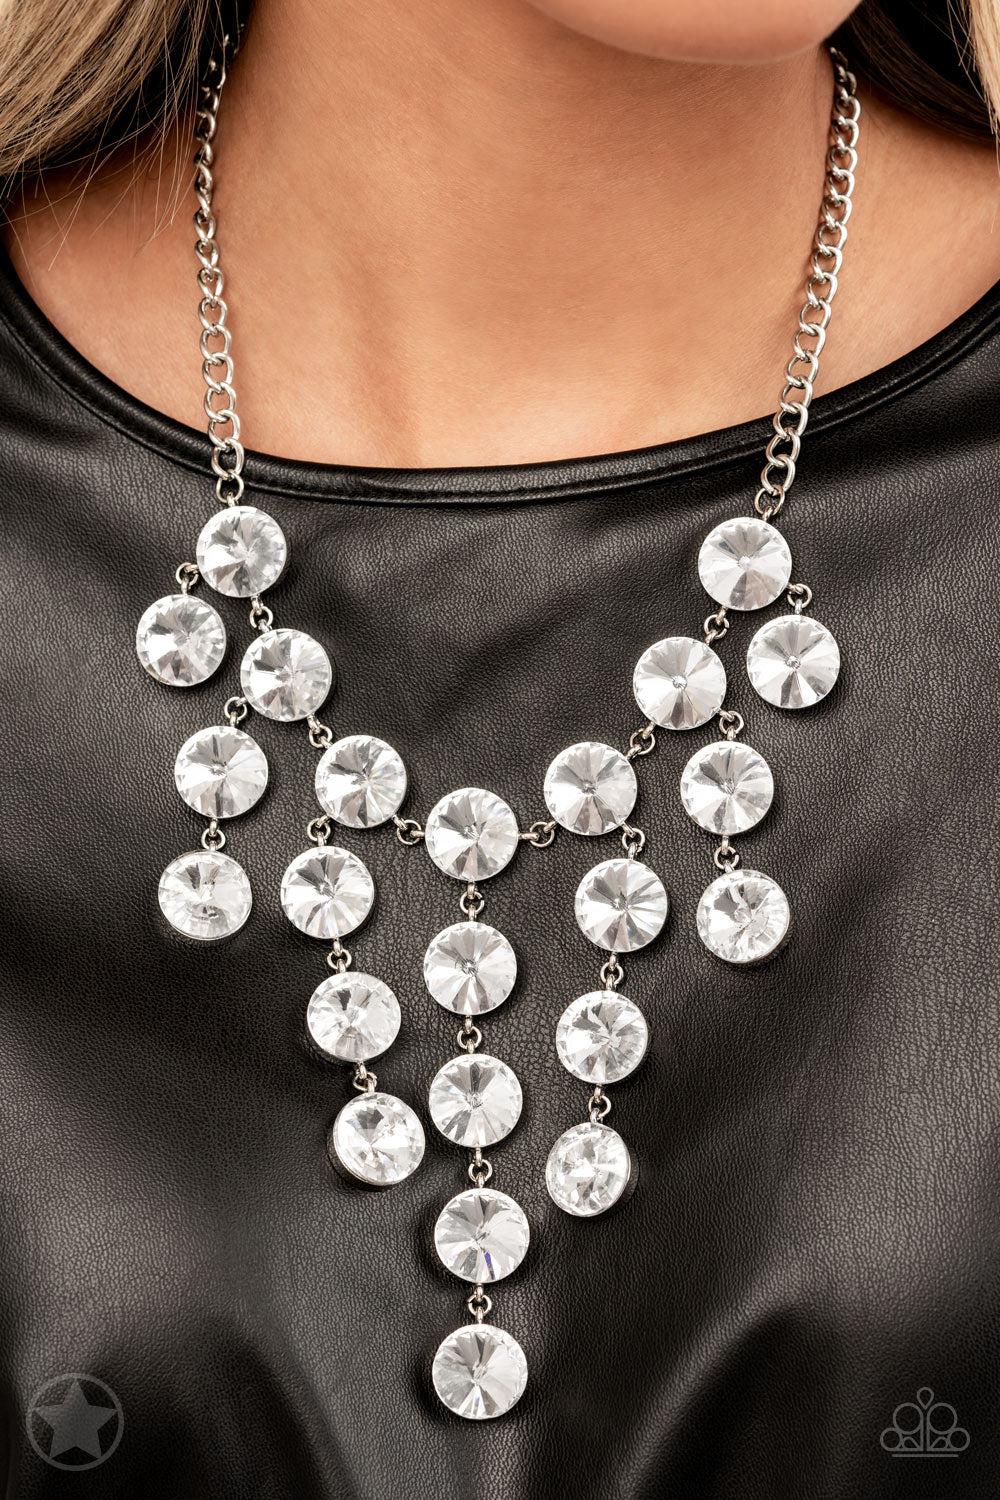 Spotlight Stunner White Rhinestone Necklace - Paparazzi Accessories - lightbox -CarasShop.com - $5 Jewelry by Cara Jewels